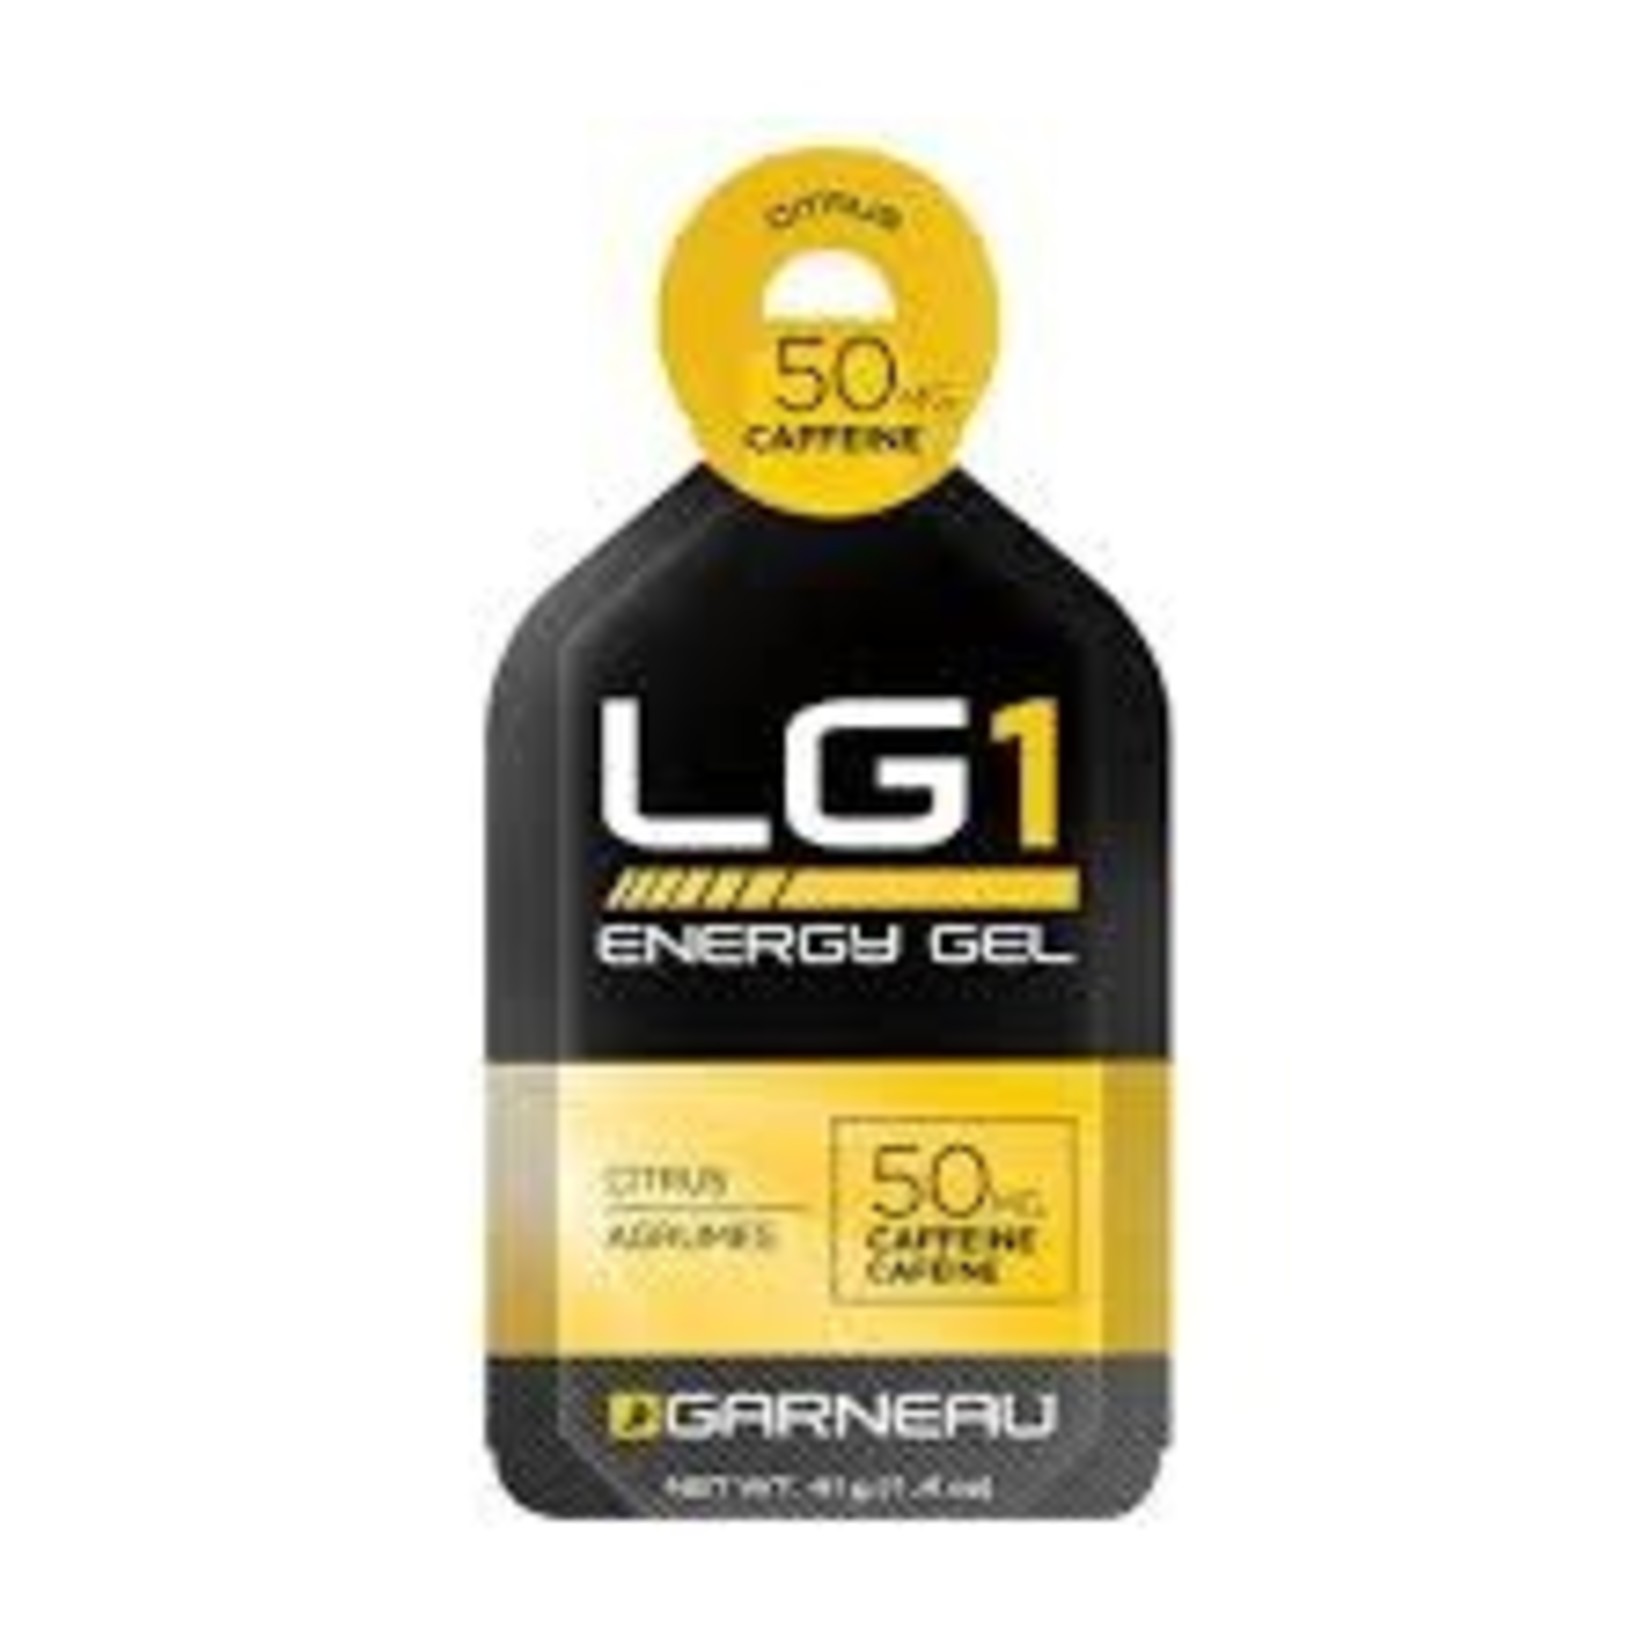 LG1 ENERGY GEL - CITRUS single